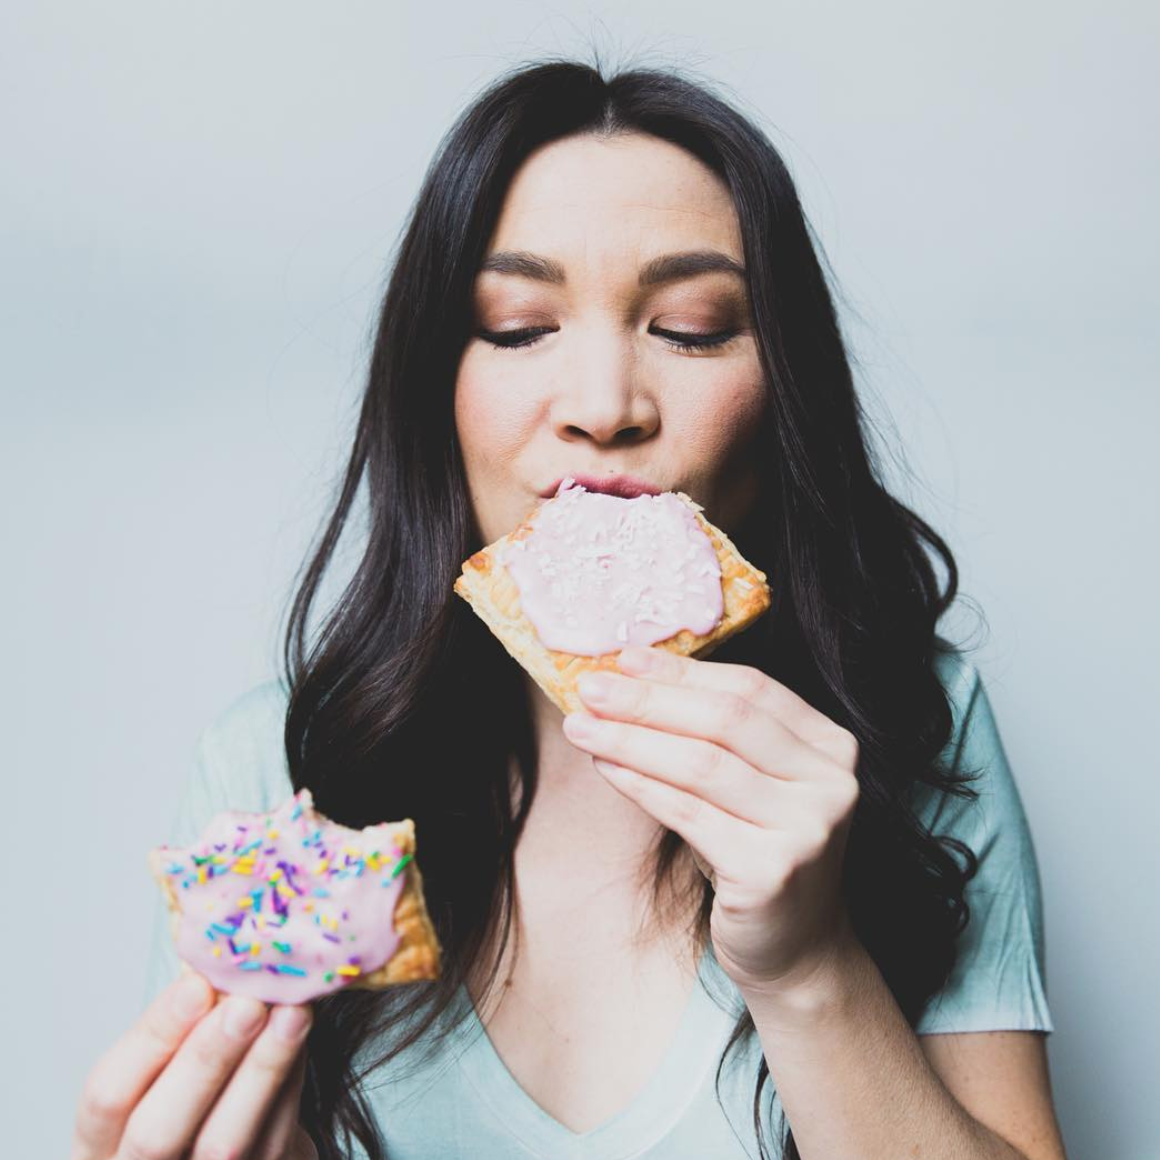 Canadian ex-TV presenter Lauren Toyota creates vegan junk food on her YouTube channel and Blog